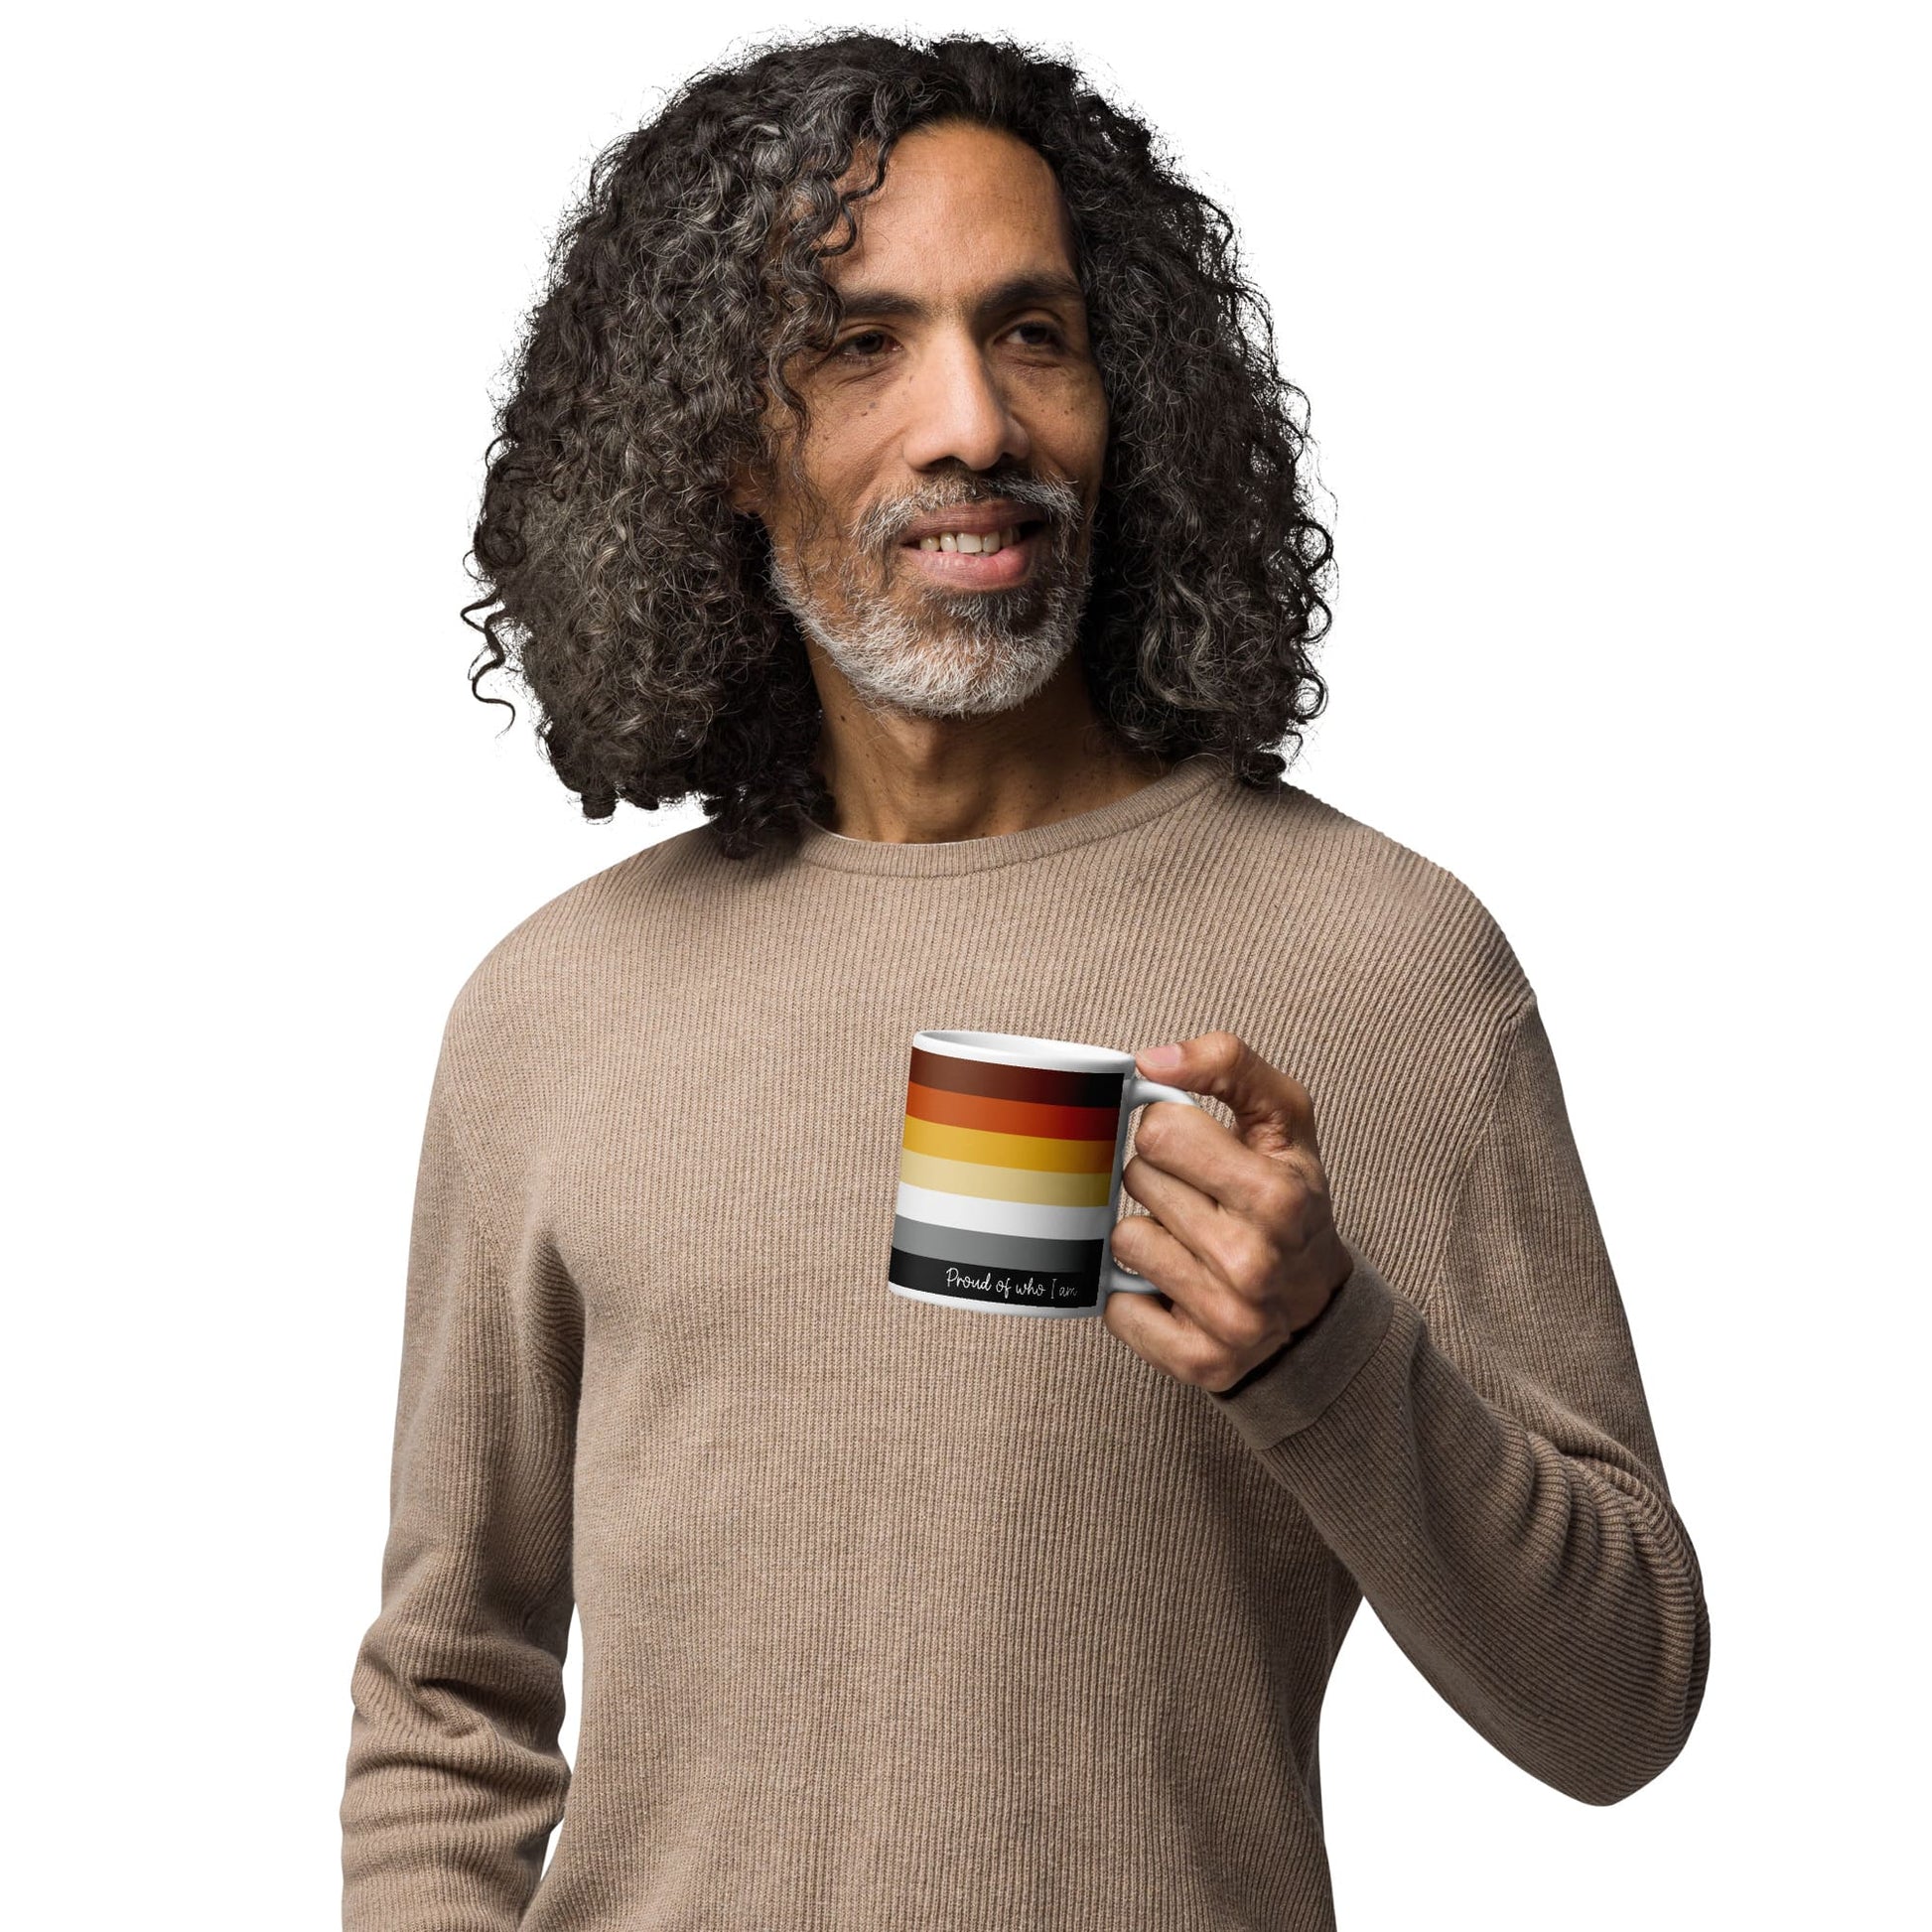 bear pride coffee mug, model